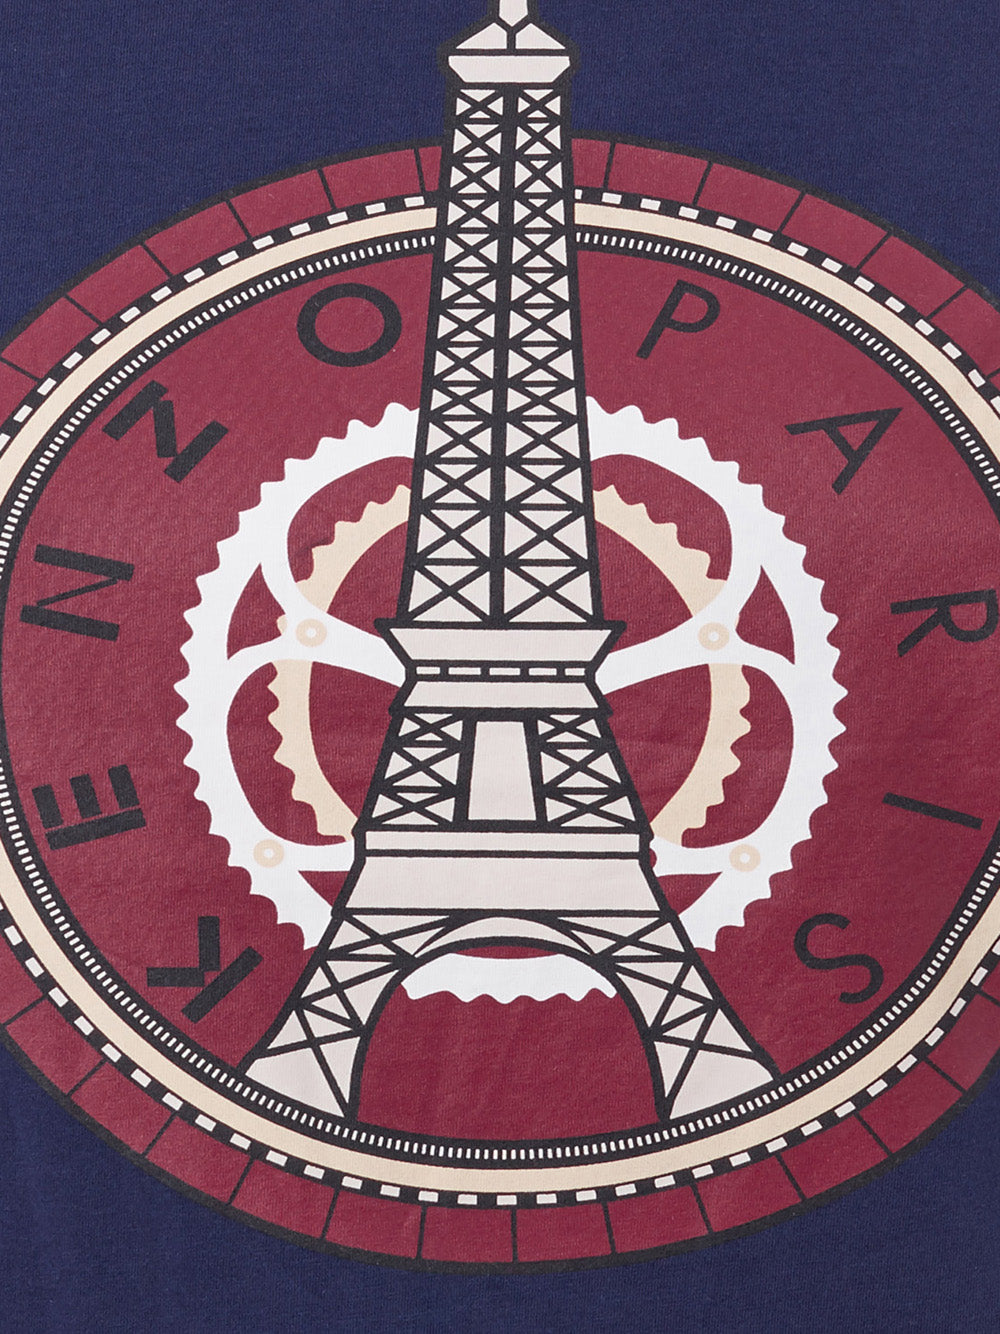 Kenzo Tour Eiffel T-Shirt